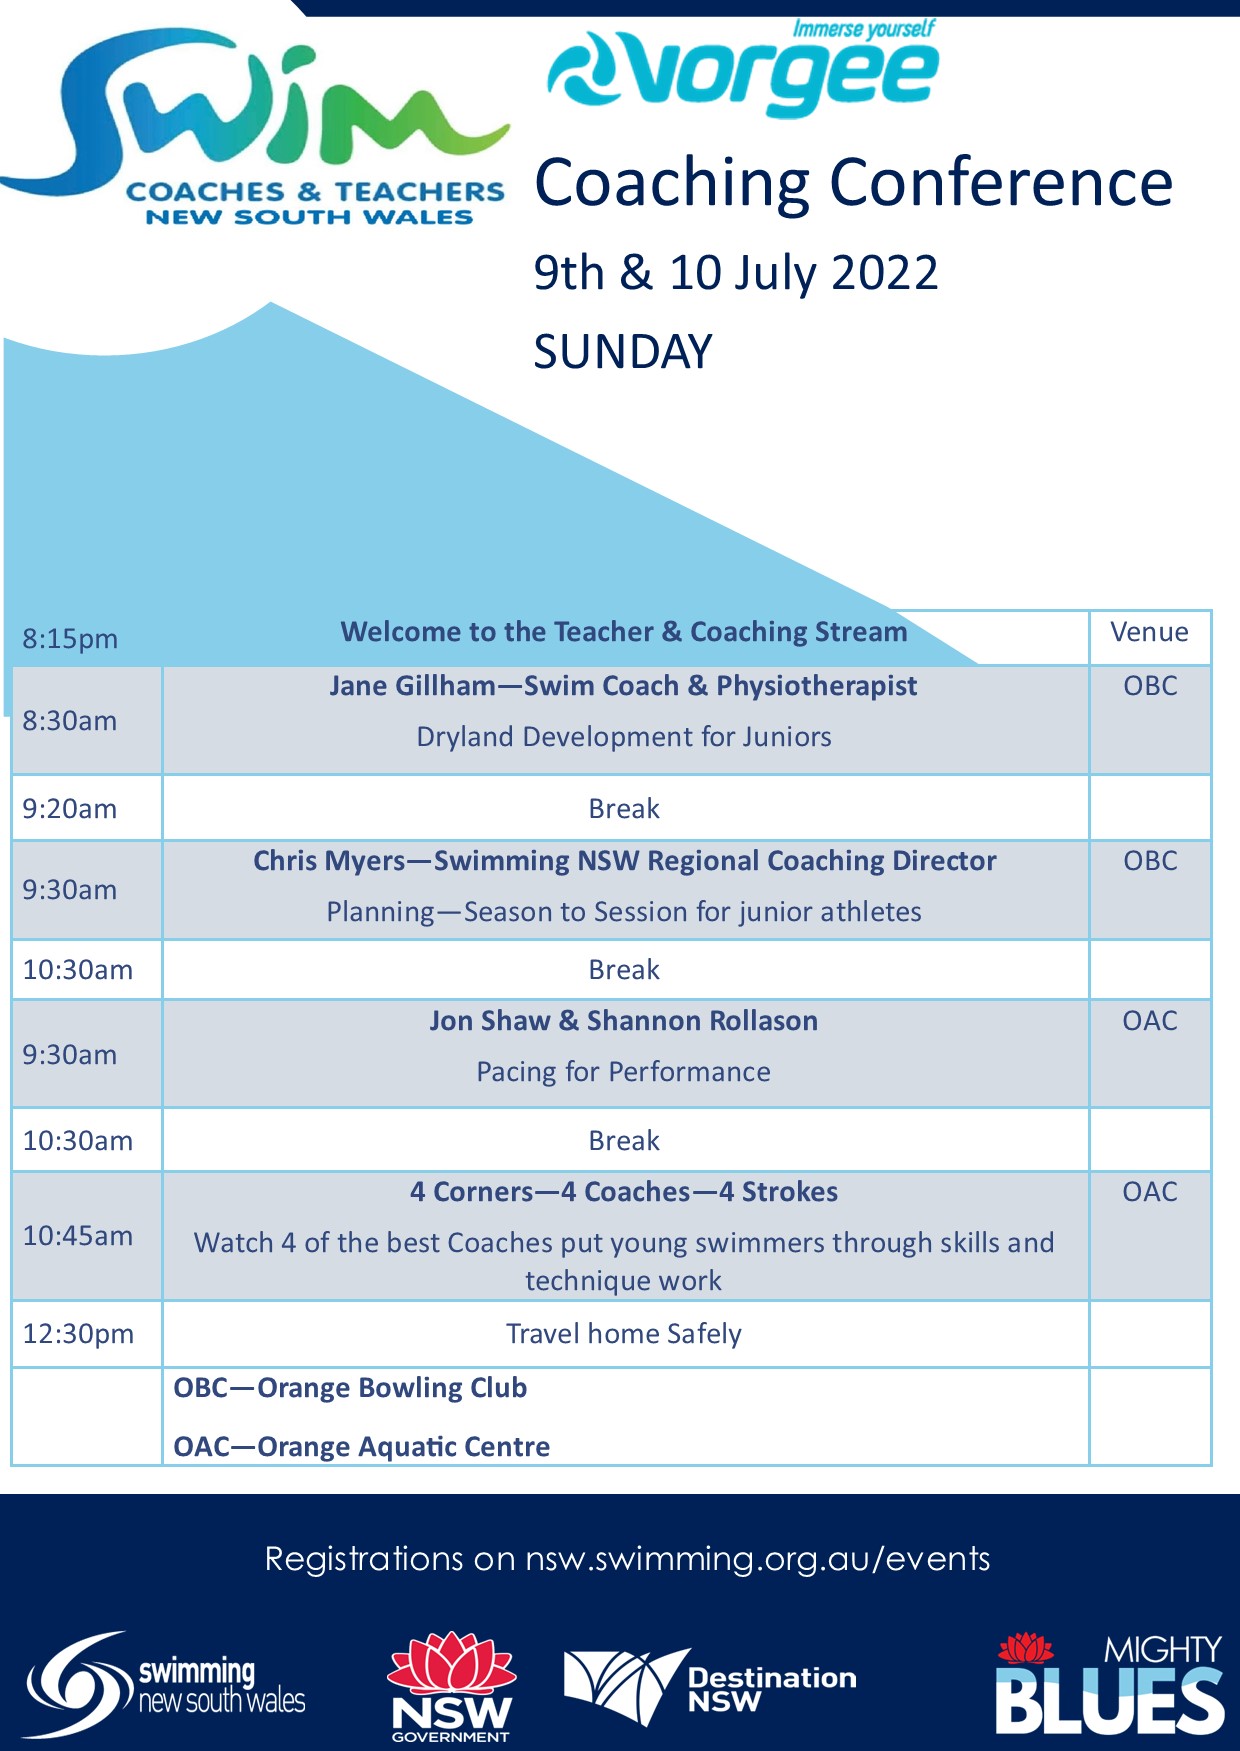 SCTA NSW 2022 Conference Coaching Program P2